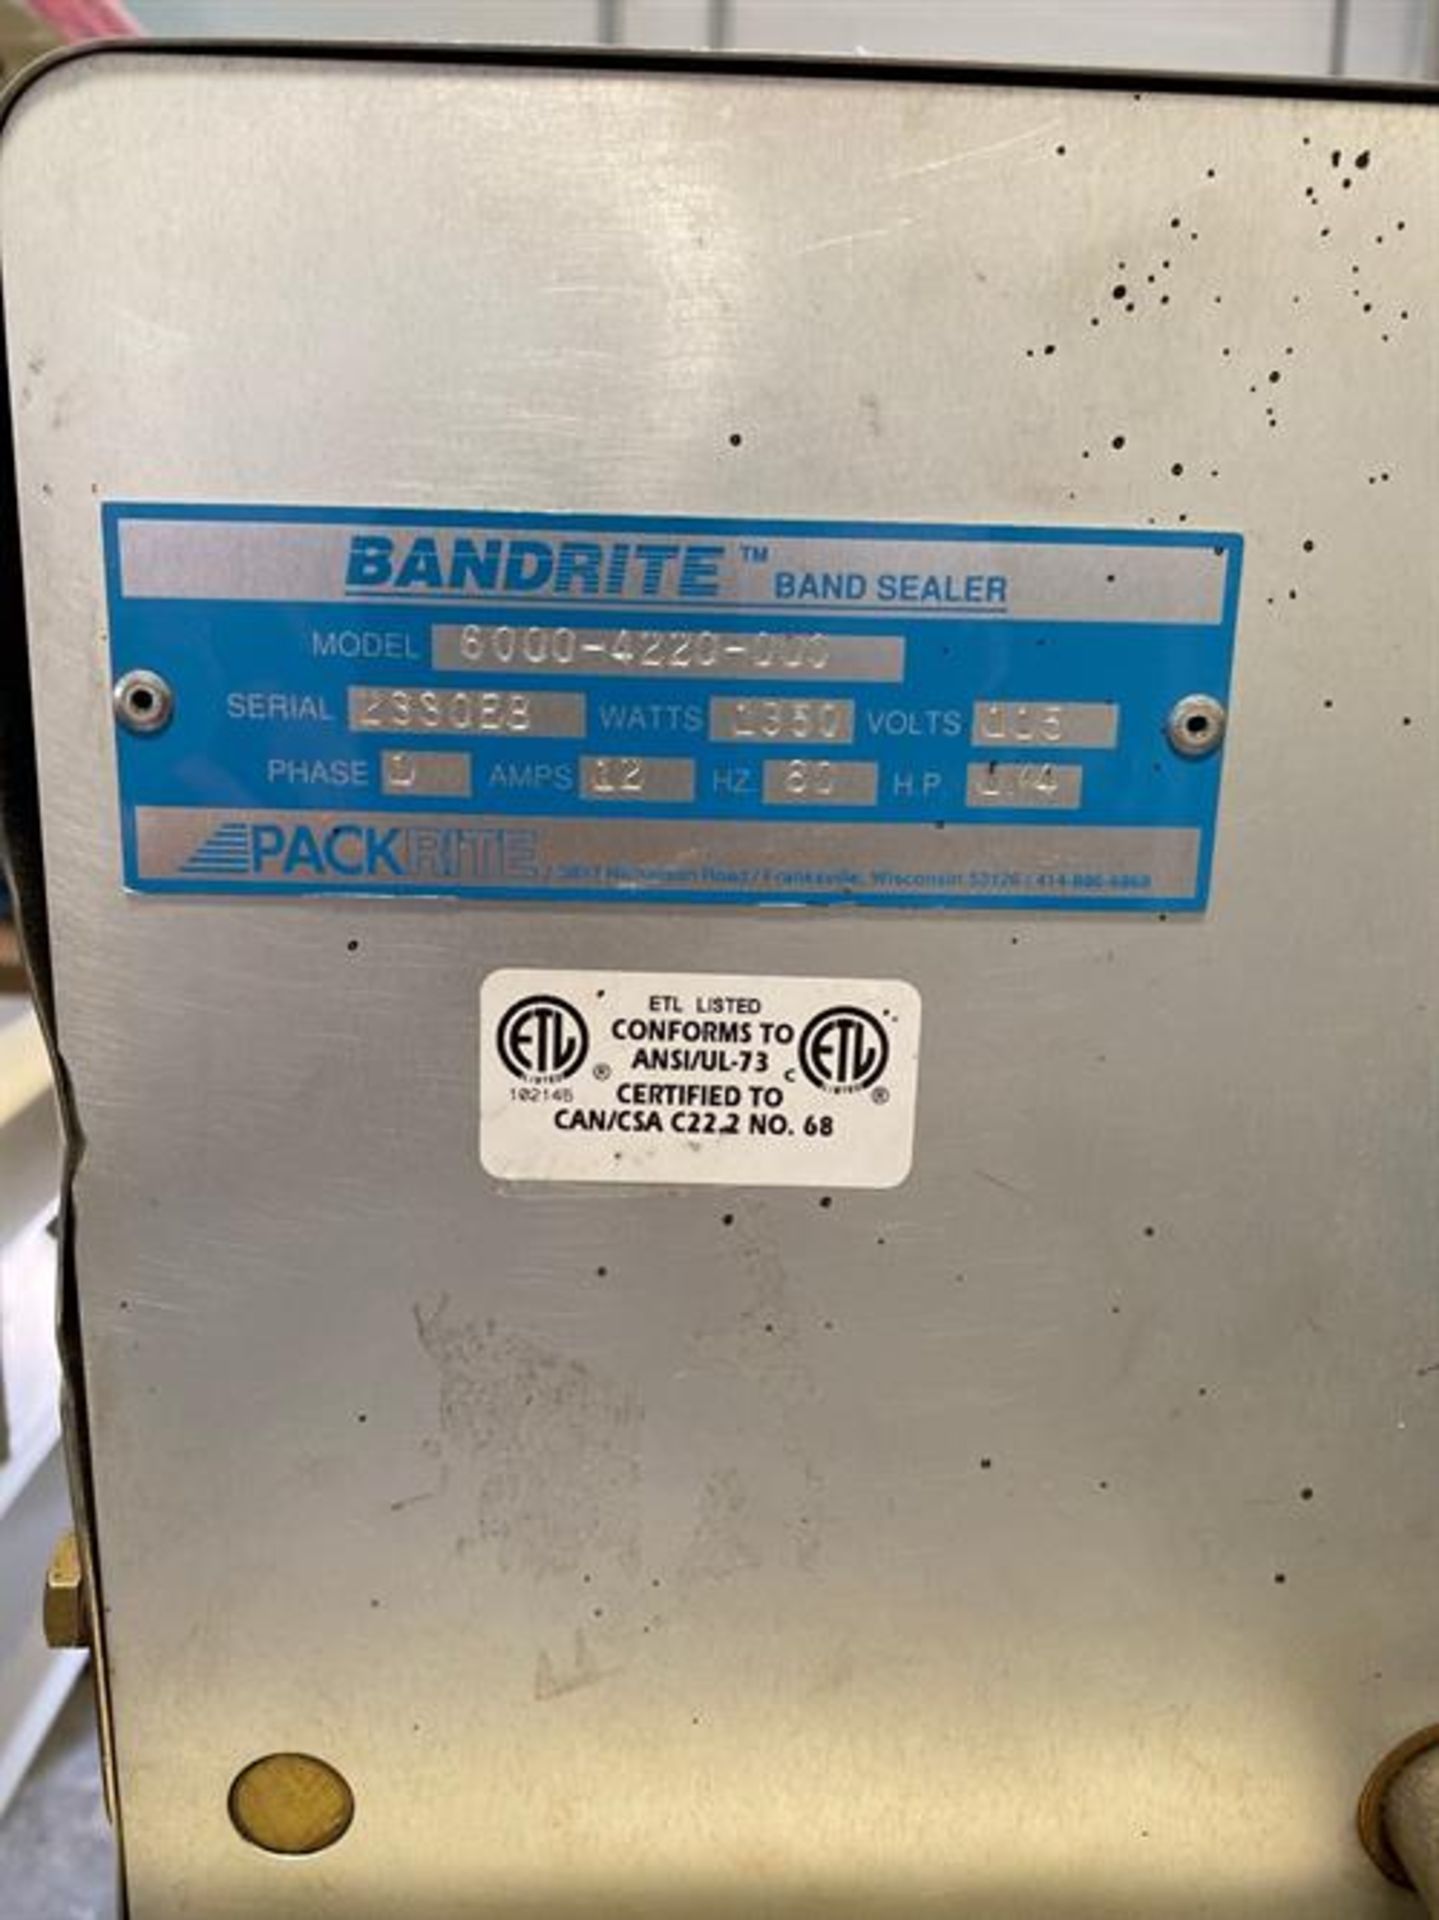 Band Rite Model 6000-4220-000 Bag Sealer - Serial number 2330-EB - 0.75" wide sealing band - Heat - Image 4 of 6